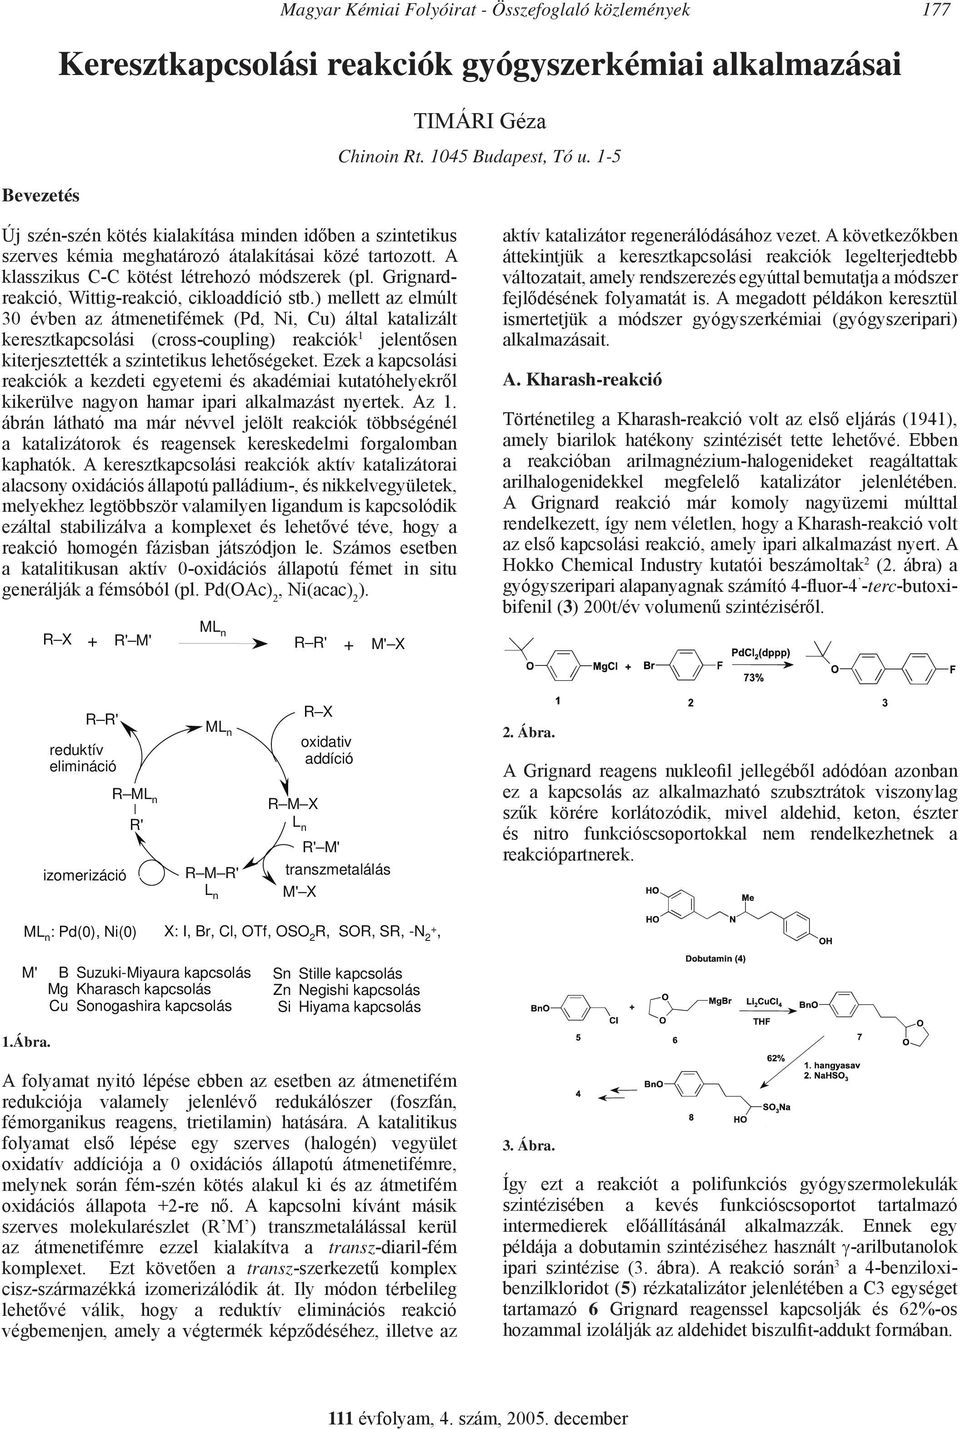 Grignardreakció, Wittig-reakció, cikloaddíció stb.